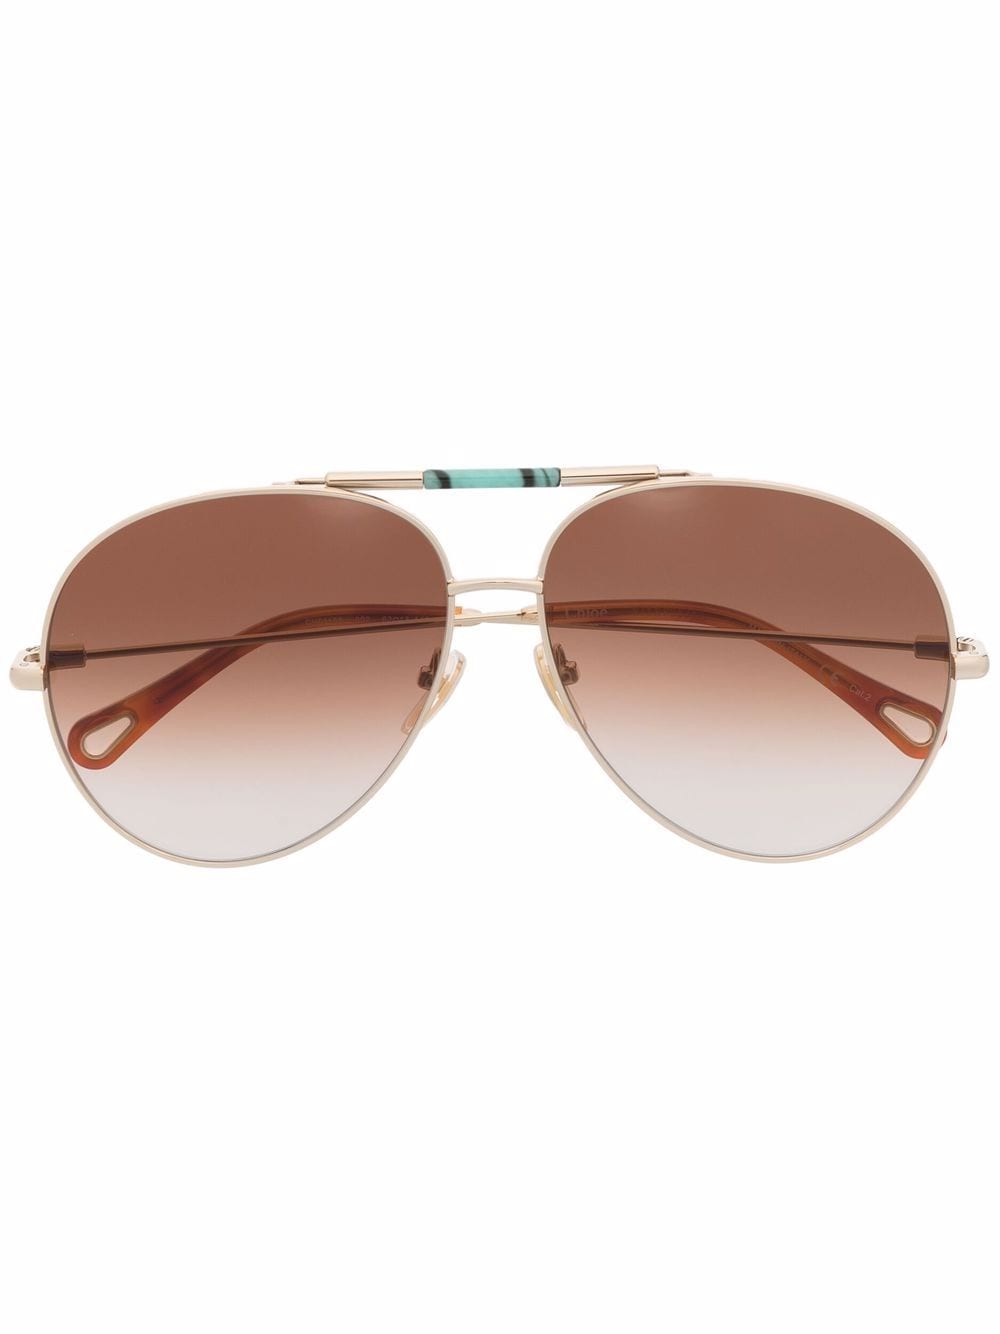 Brown gradient pilot sunglasses